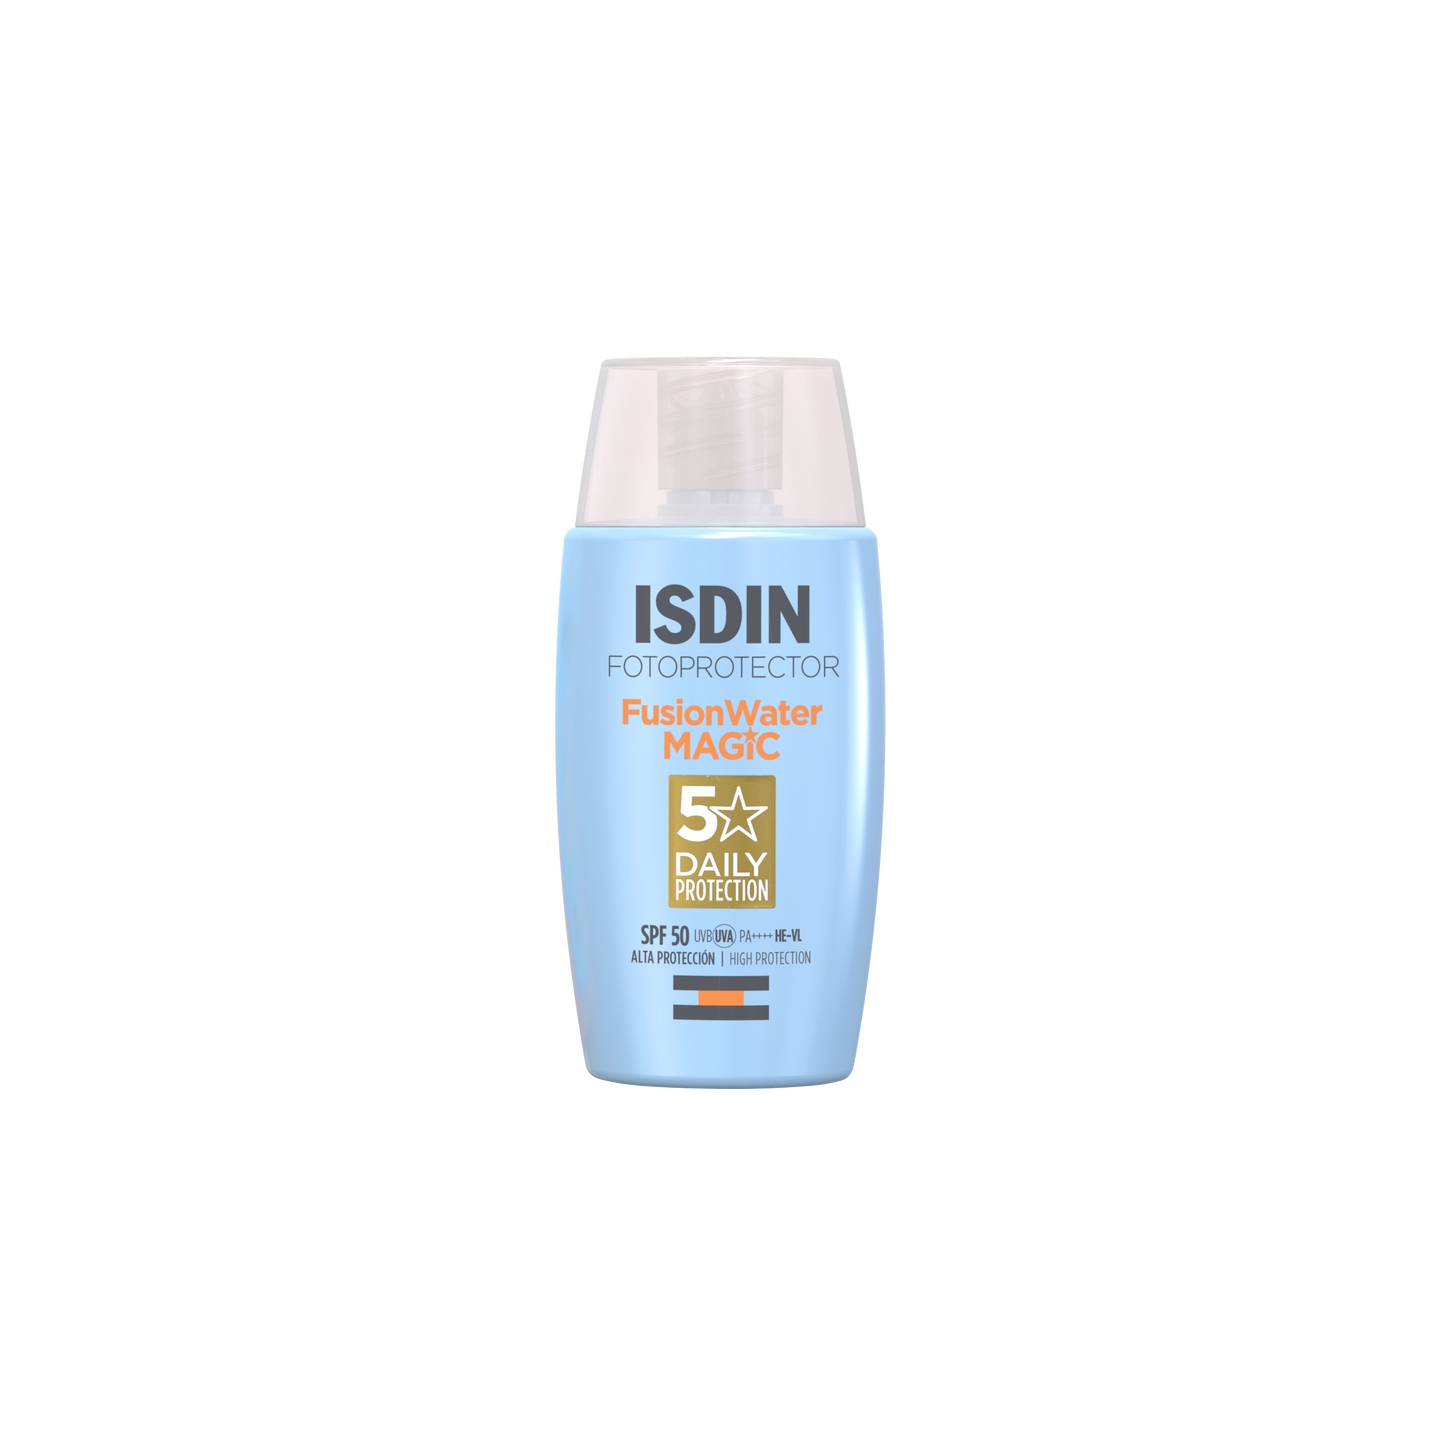 Isdin Fotoprotector Fusion Water Magic SPF 50 Facial Sunscreen 50ml